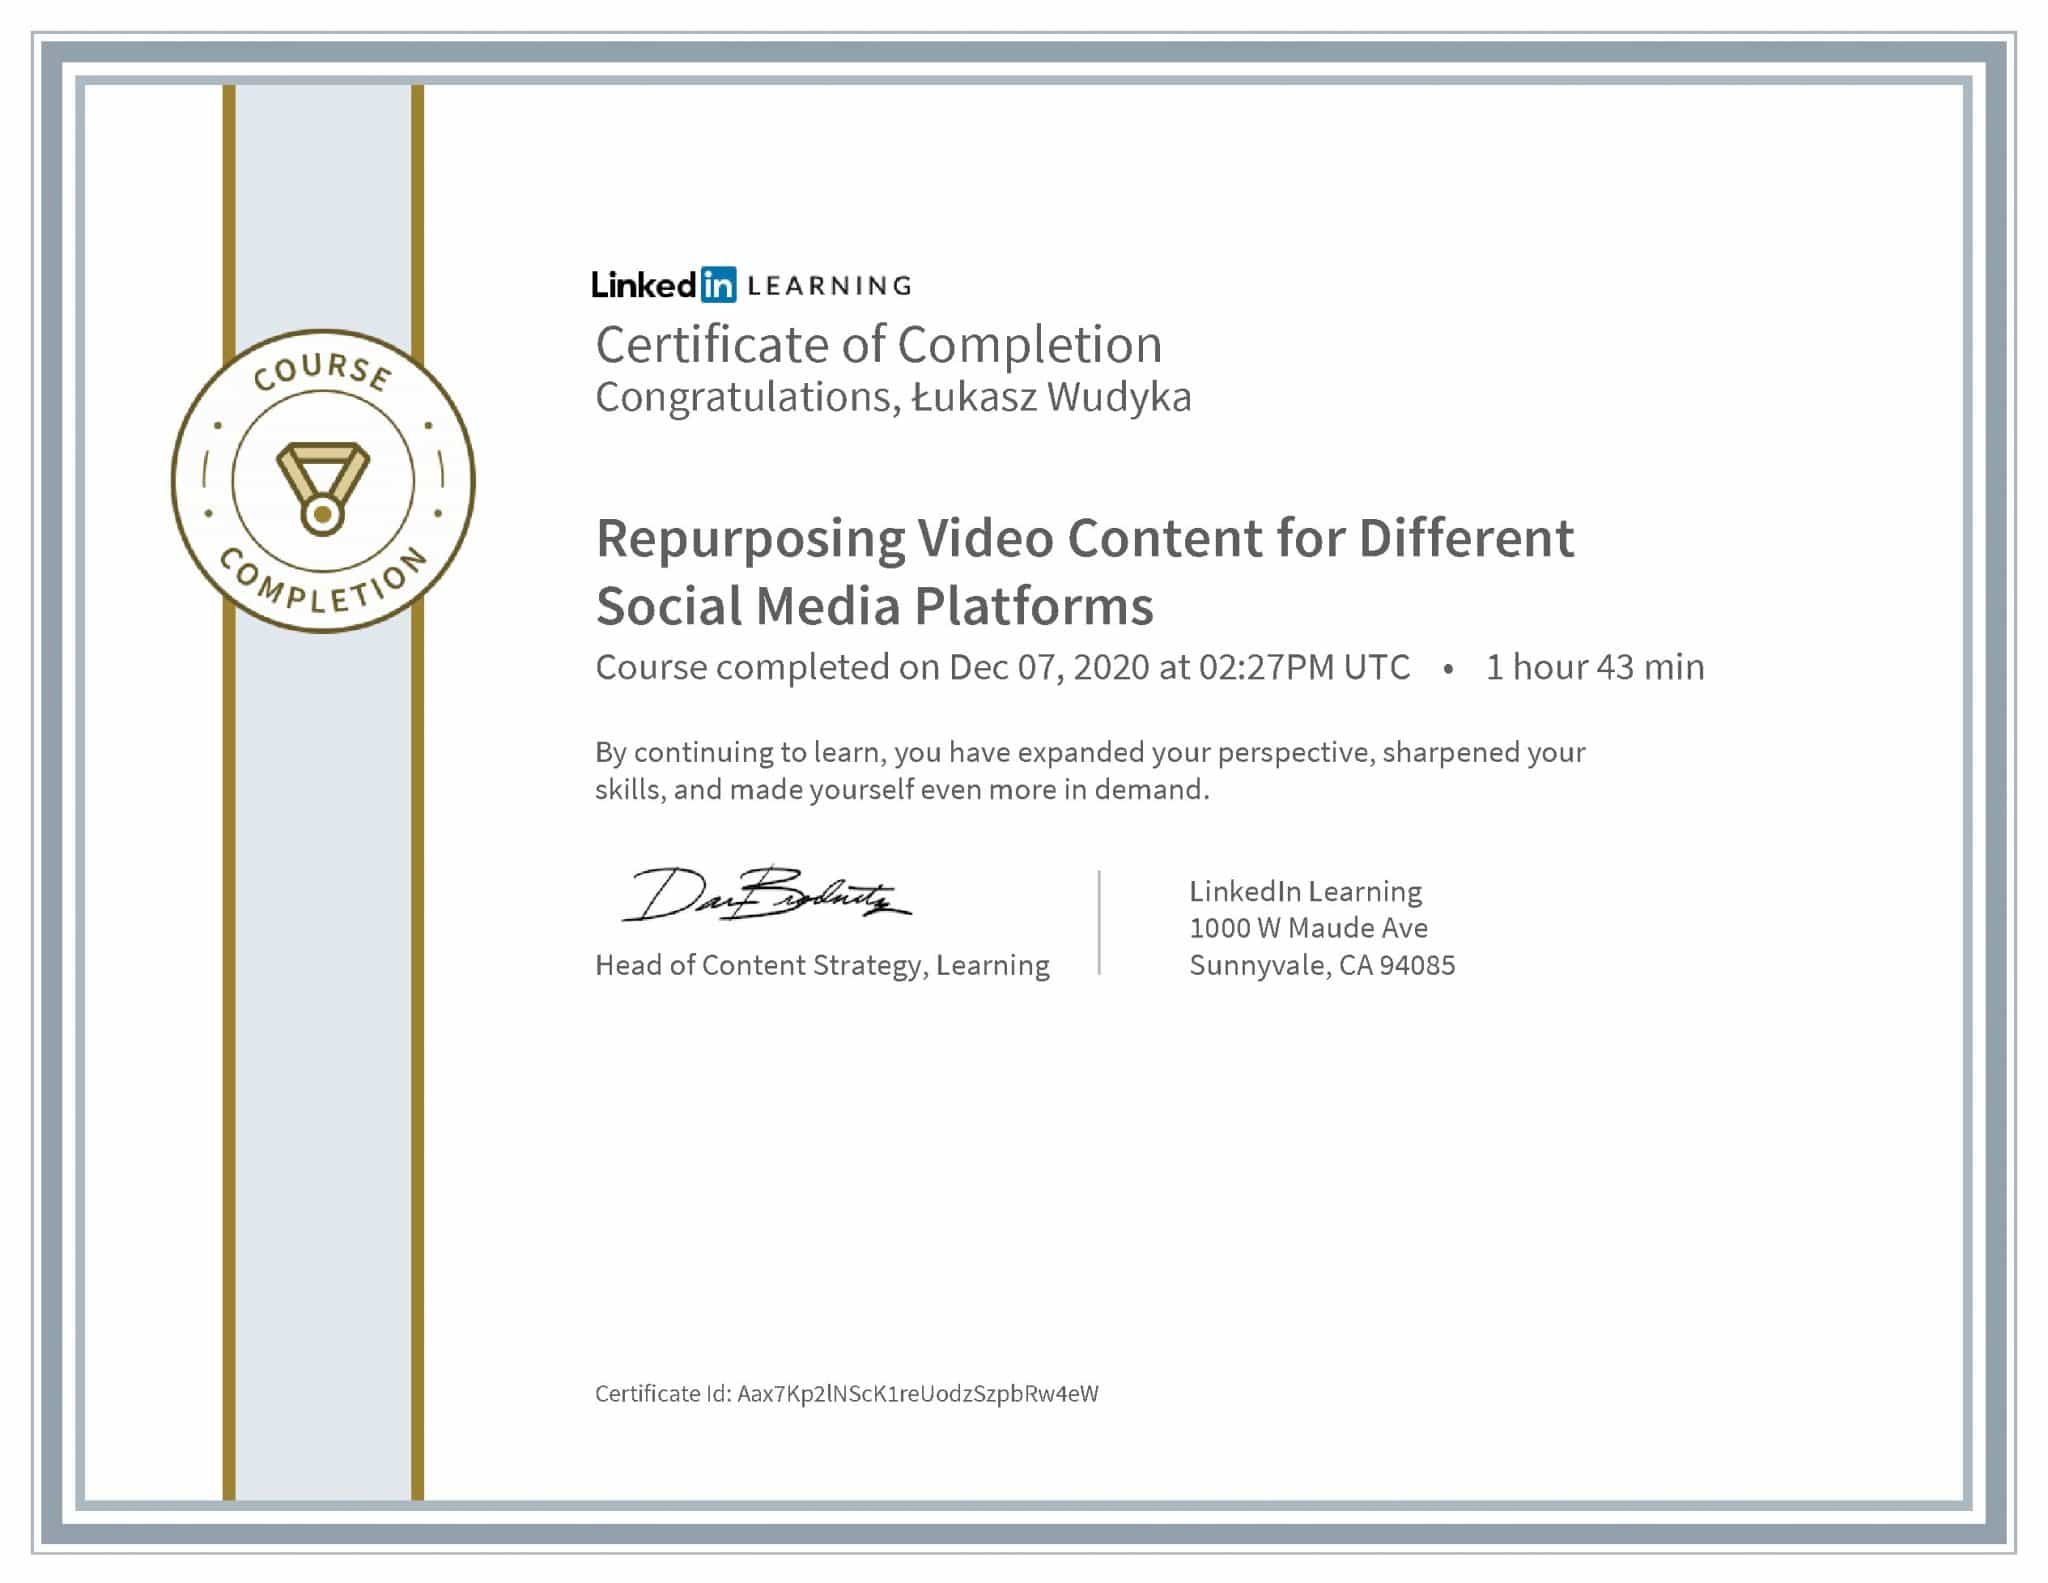 Łukasz Wudyka certyfikat LinkedIn Repurposing Video Content for Different Social Media Platforms